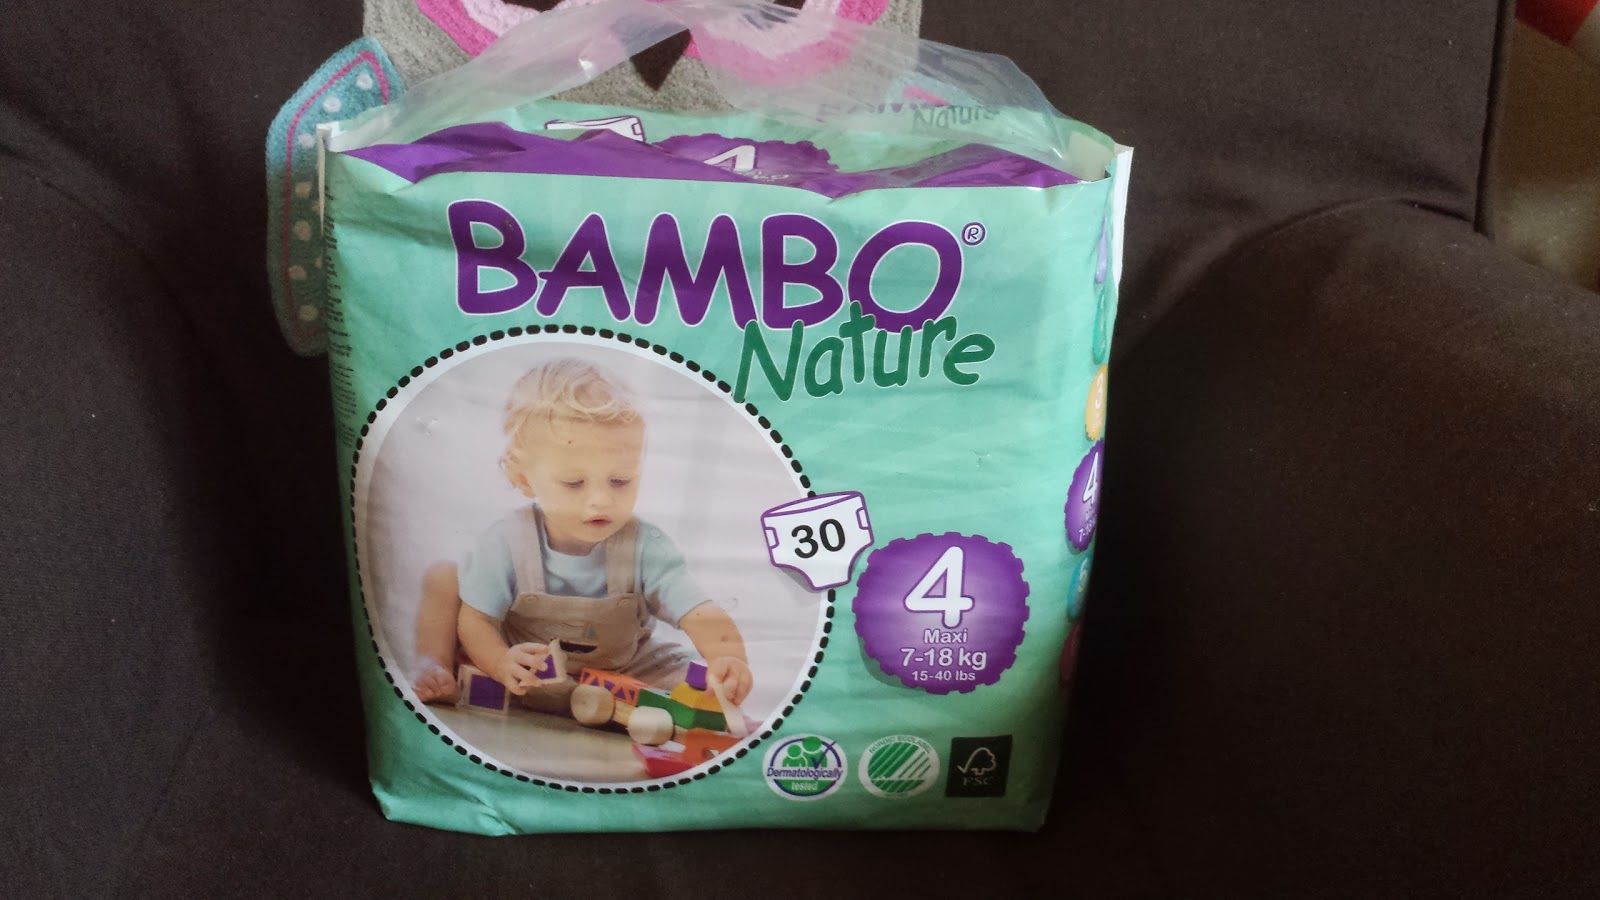 Bambo Nature Diaper Review